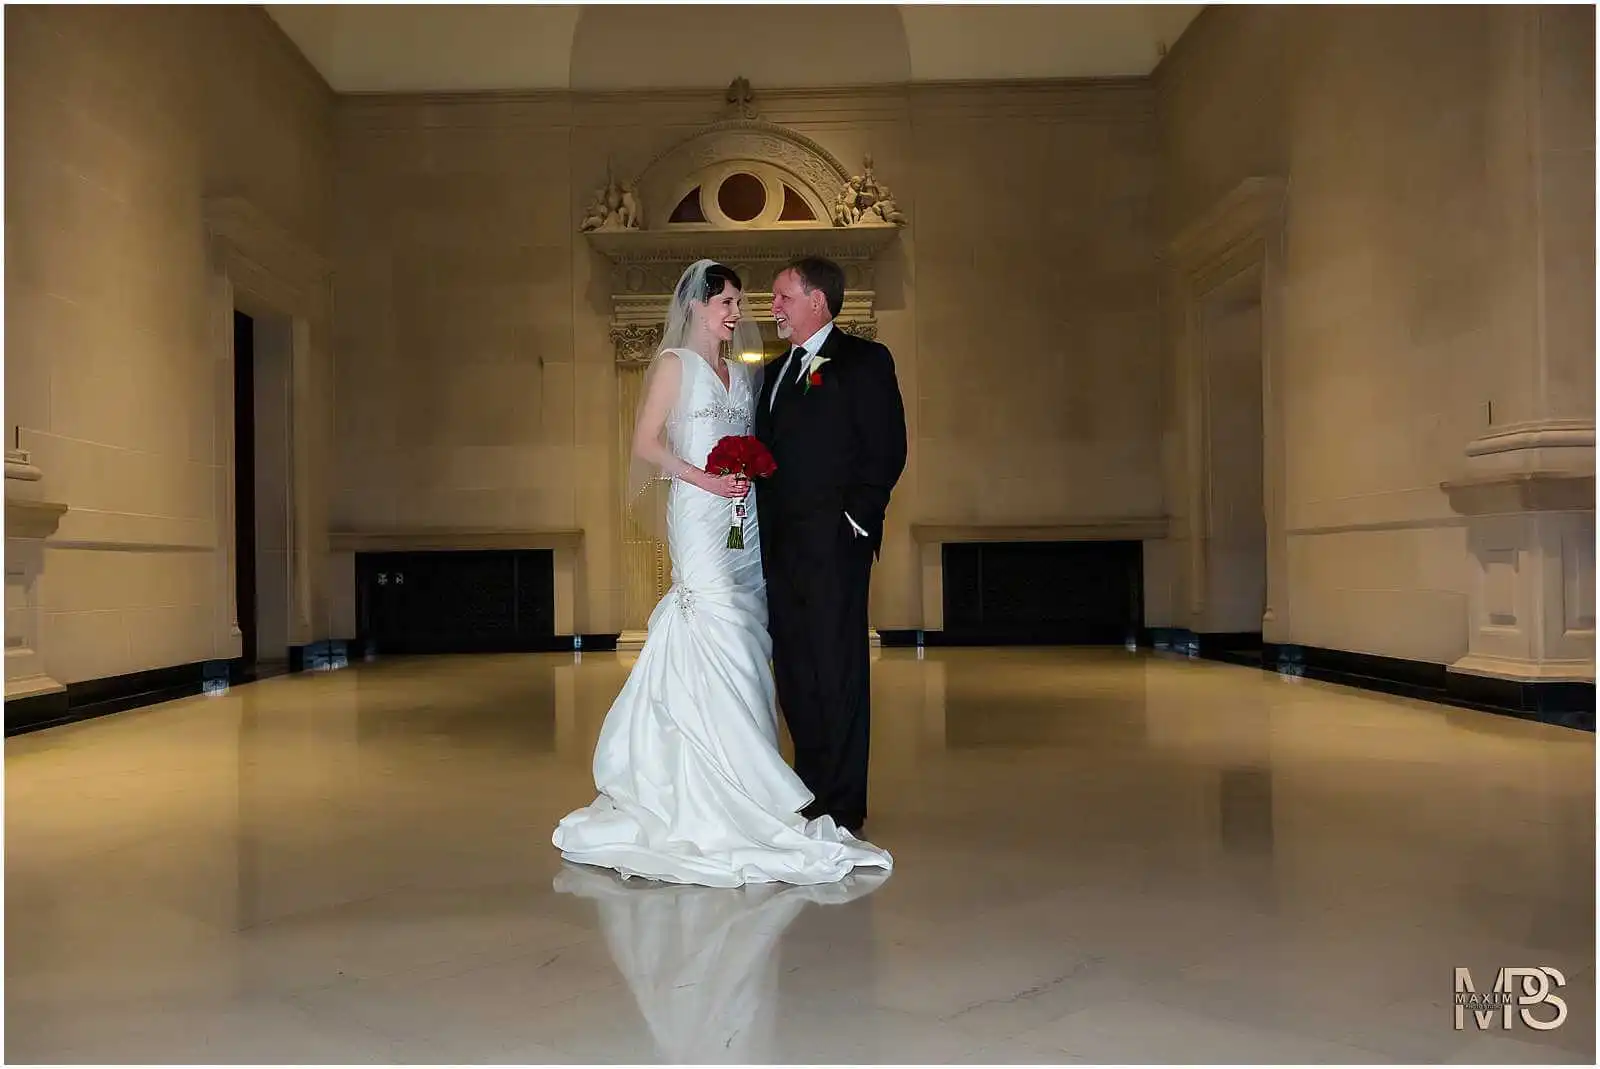 Dayton Art Institute Winter Wedding portraits bride and groom